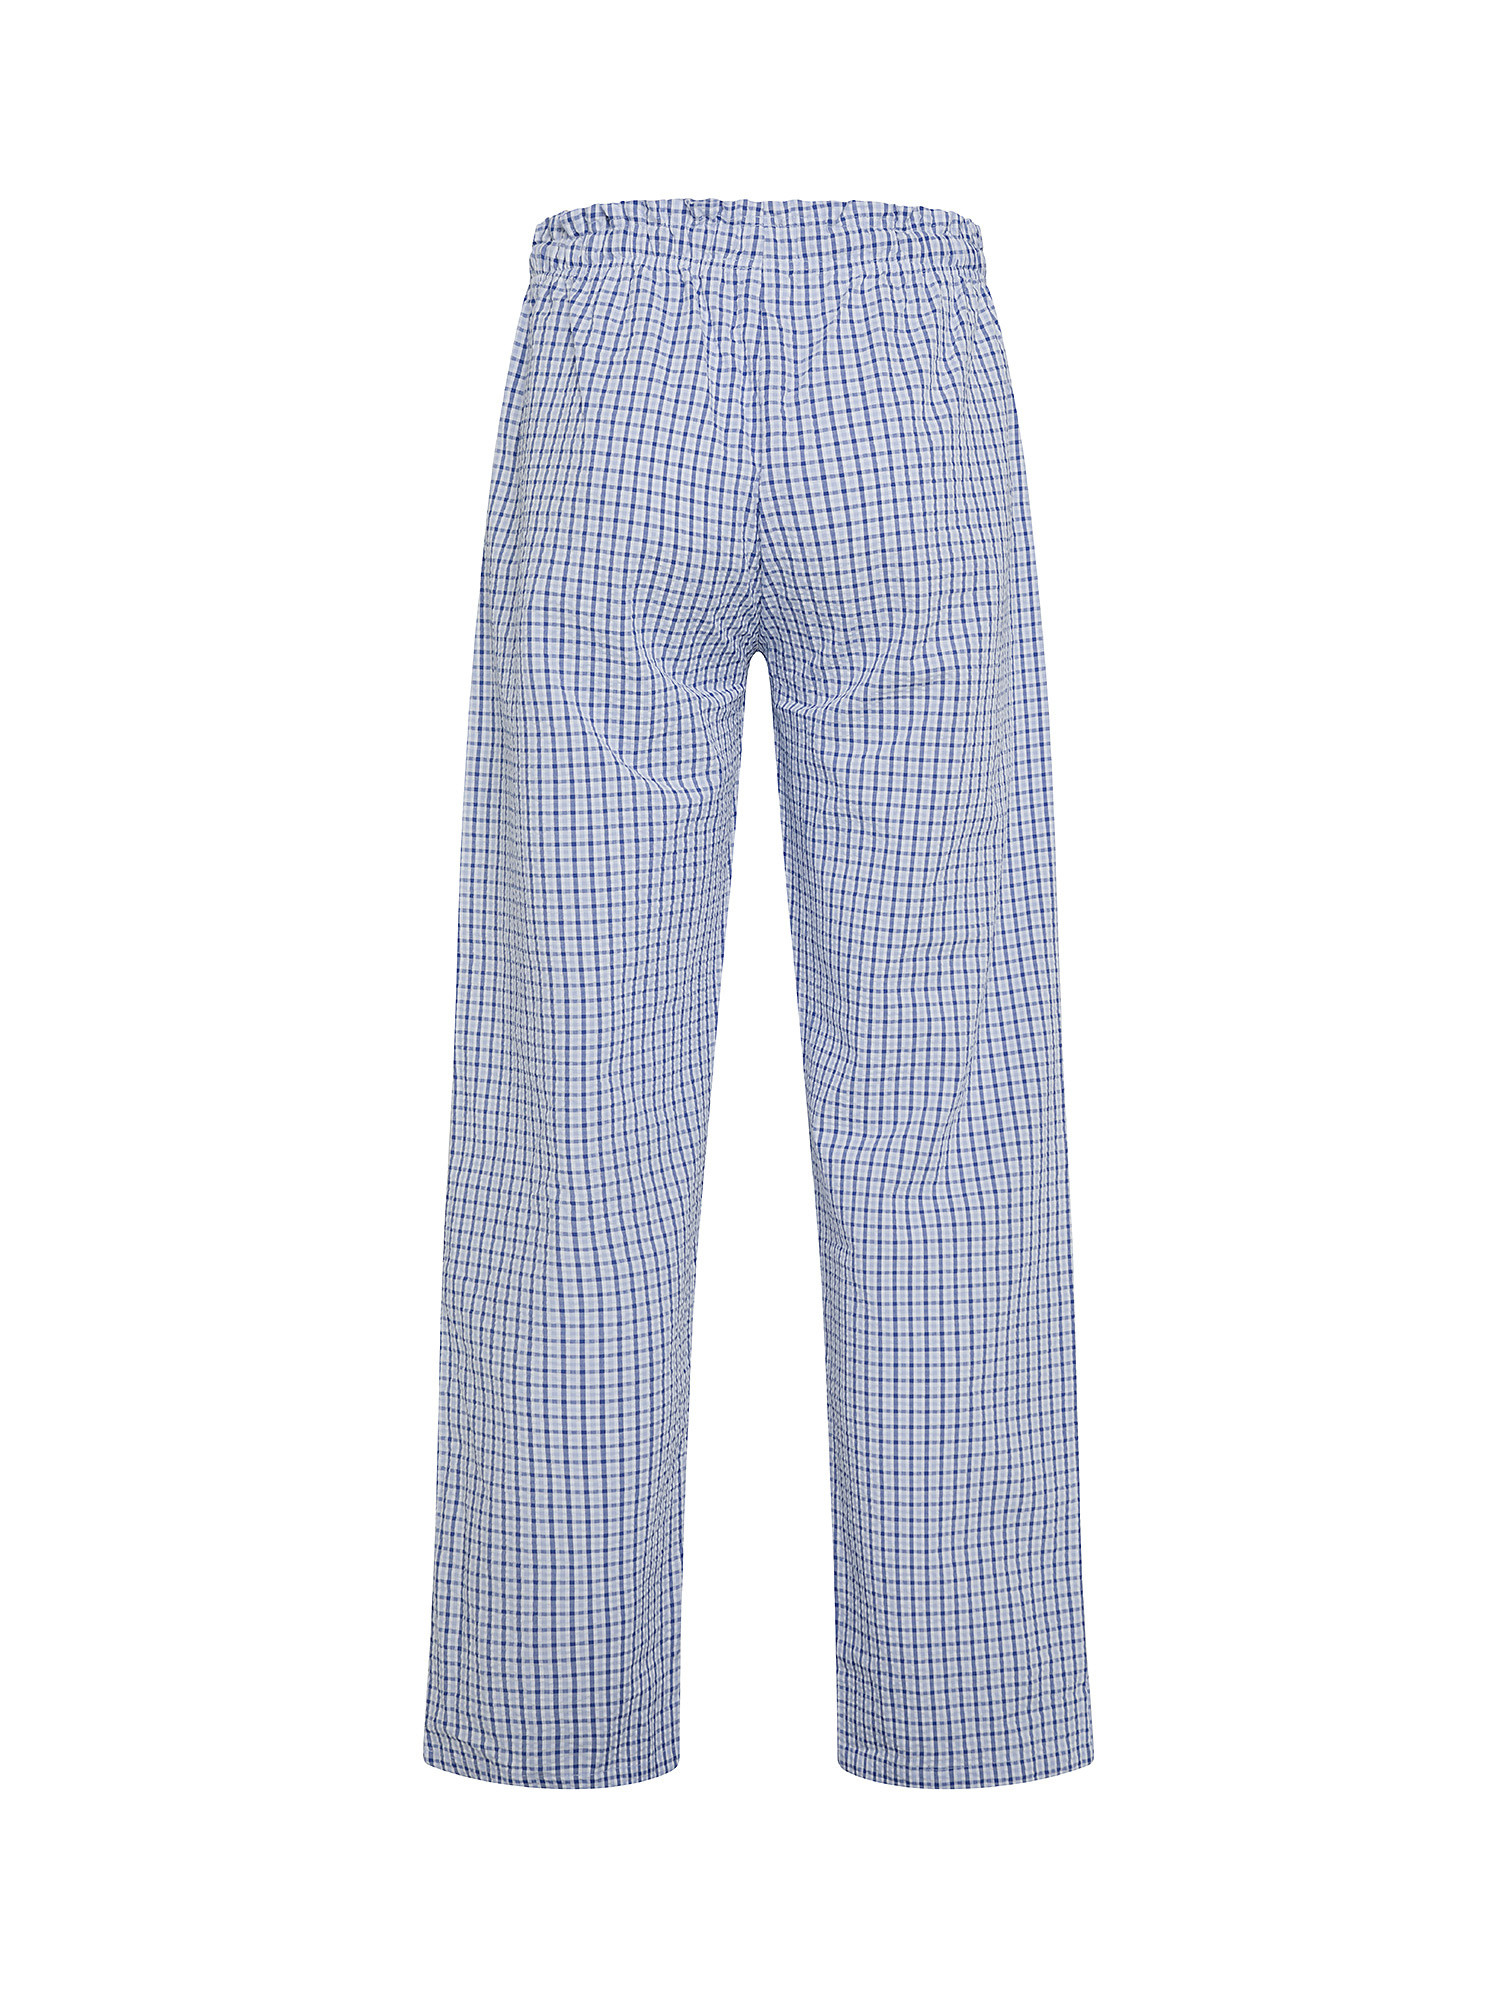 Pantalone cotone seersucker check, Multicolor, large image number 1